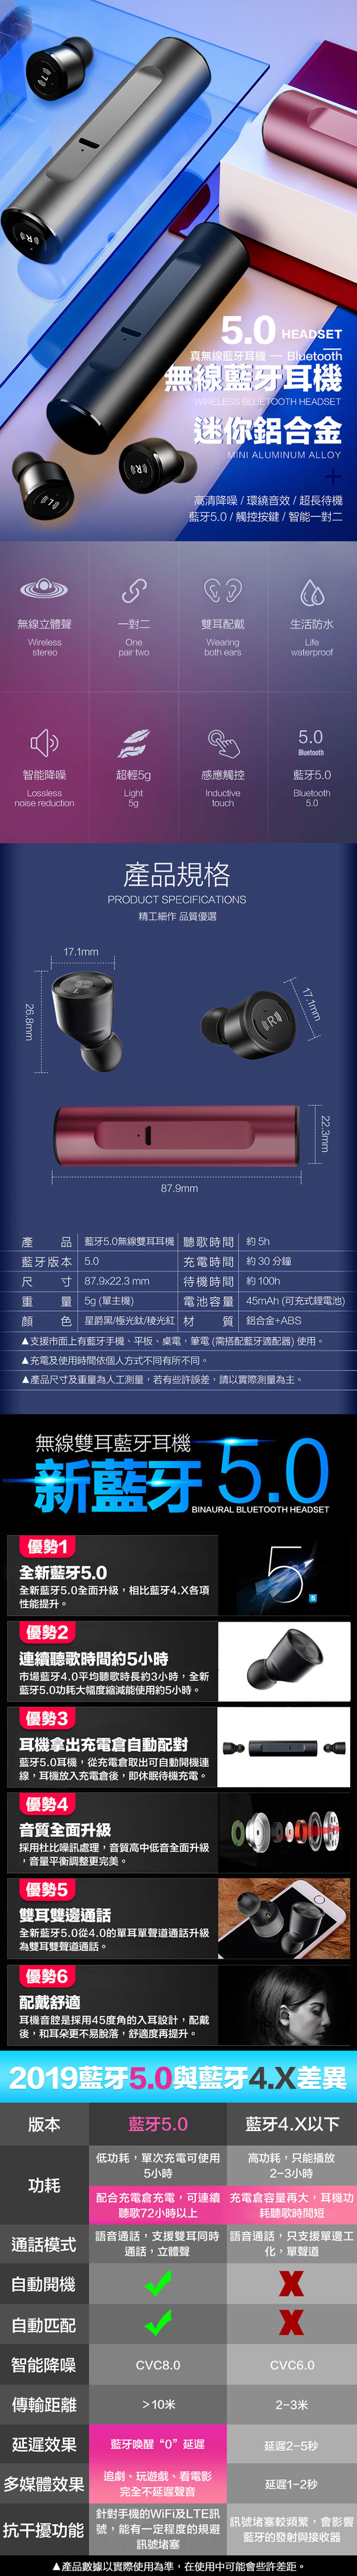 【MTK】藍牙5.0防水雙耳真無線藍牙耳機S5PRO(公司貨)